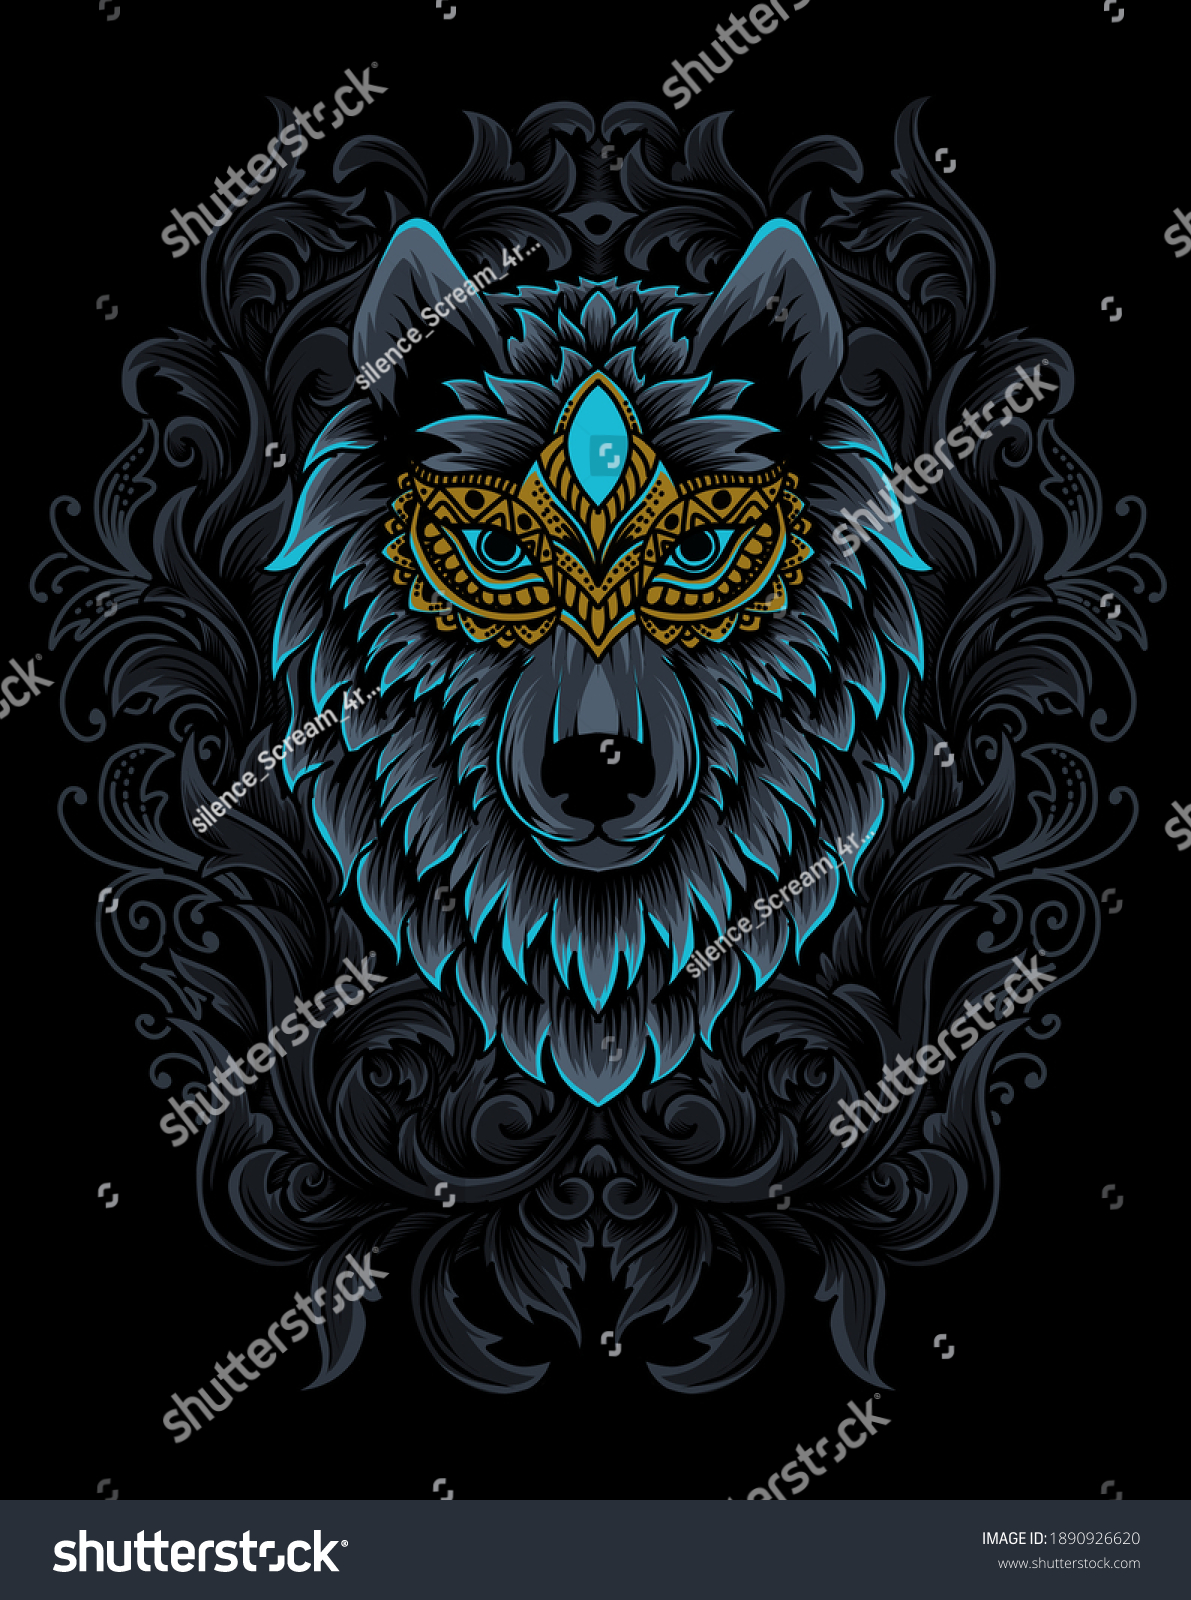 SVG of Illustration vector wolf head with vintage engraving ornament on black background. svg